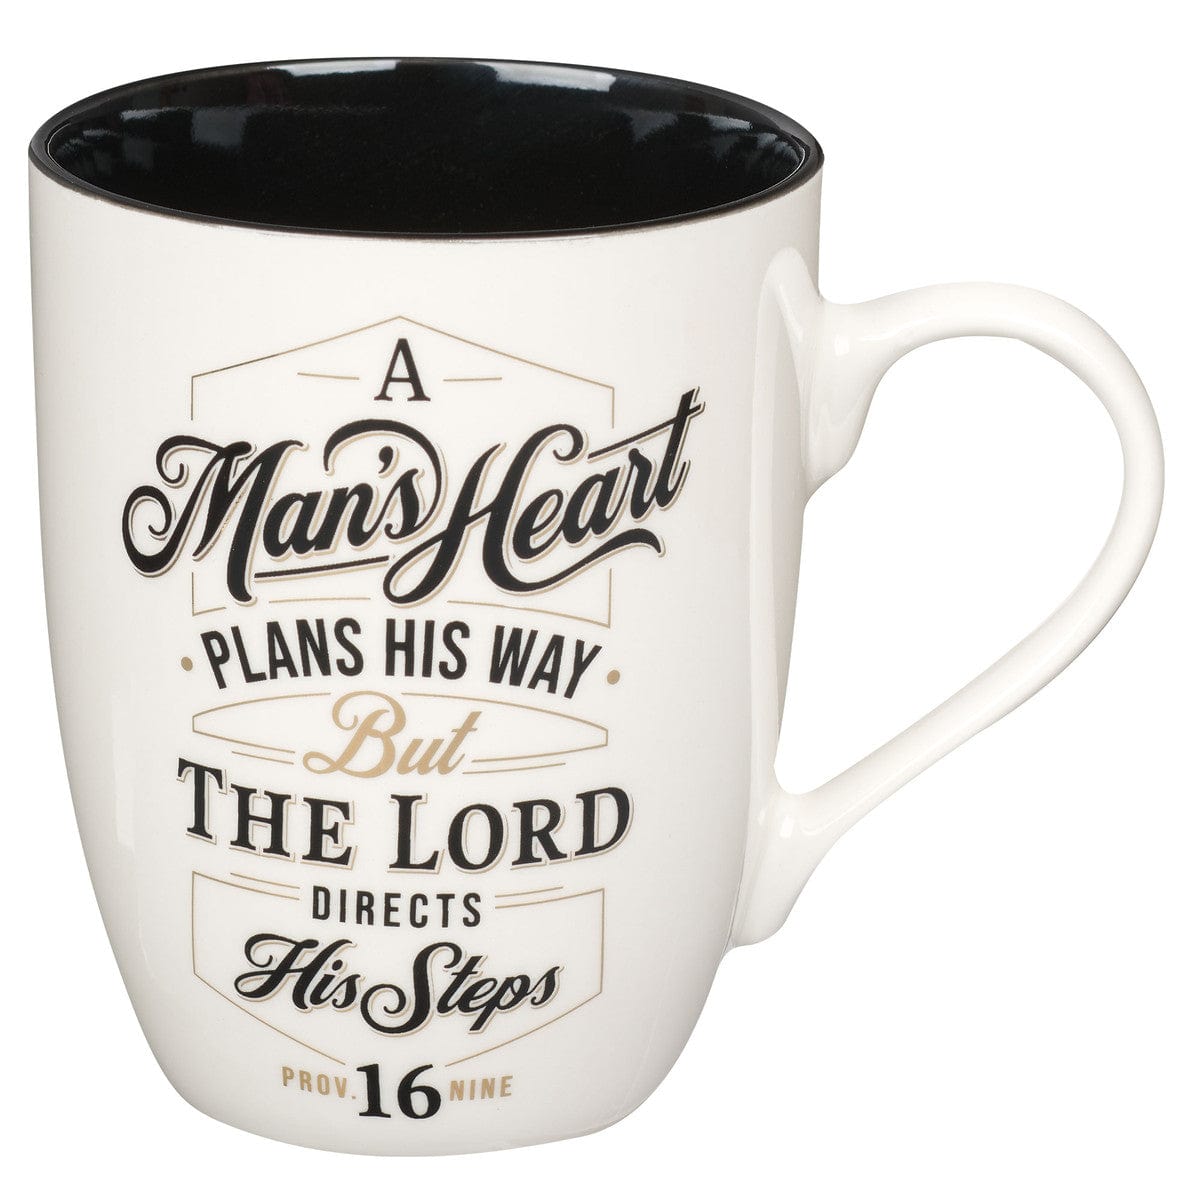 Drinkware Coffee Mug - The Lord Directs His Steps Proverbs 16:9 - Black and White Ceramic Coffee/Tea Cup CA-MUG1068